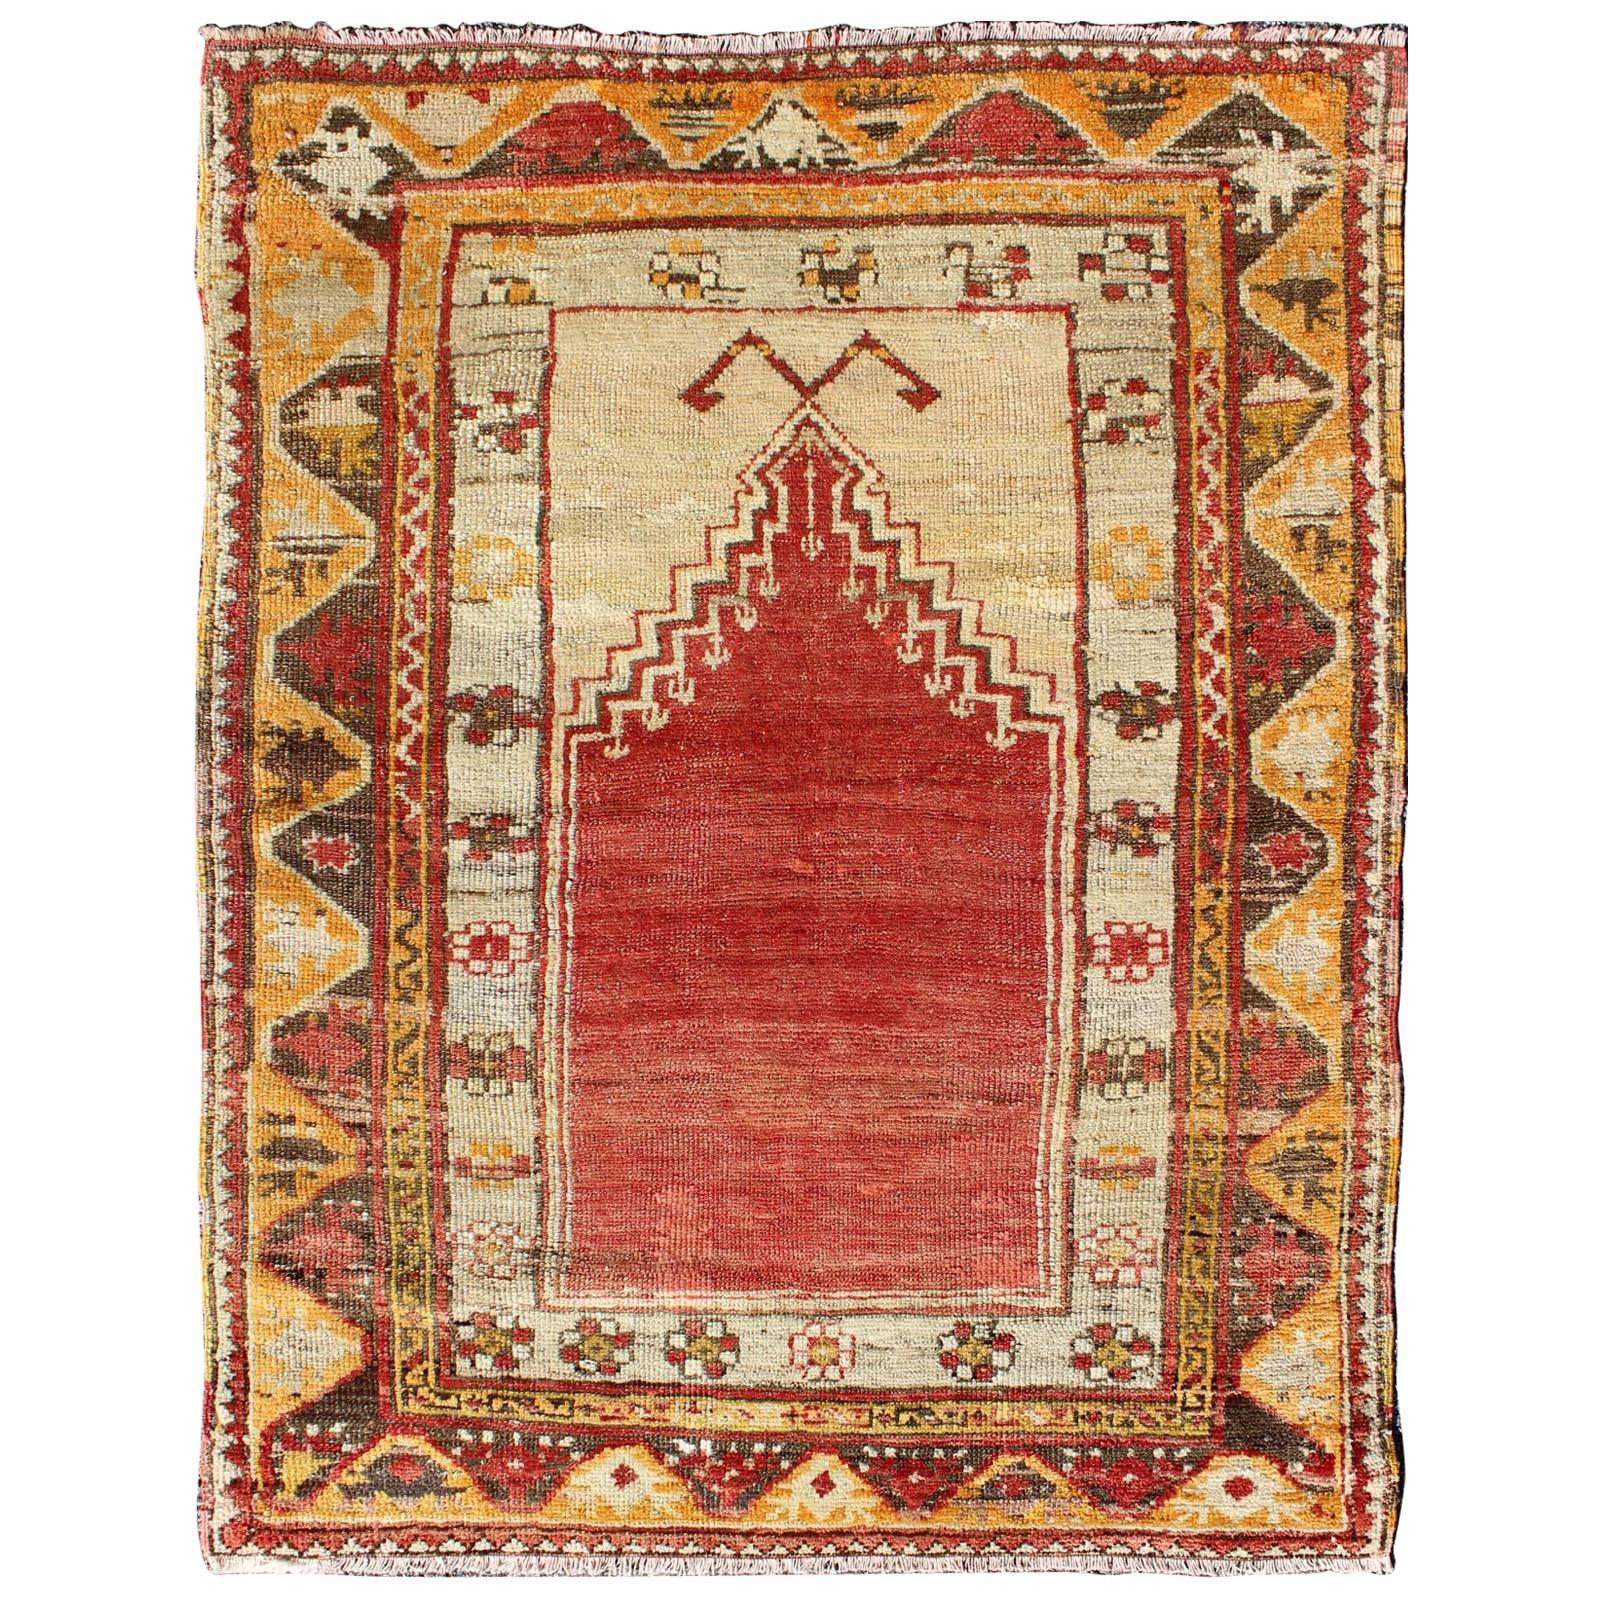 1920s Antique Turkish Oushak Prayer Rug in Red, Ivory, Orange, Cream and Brown